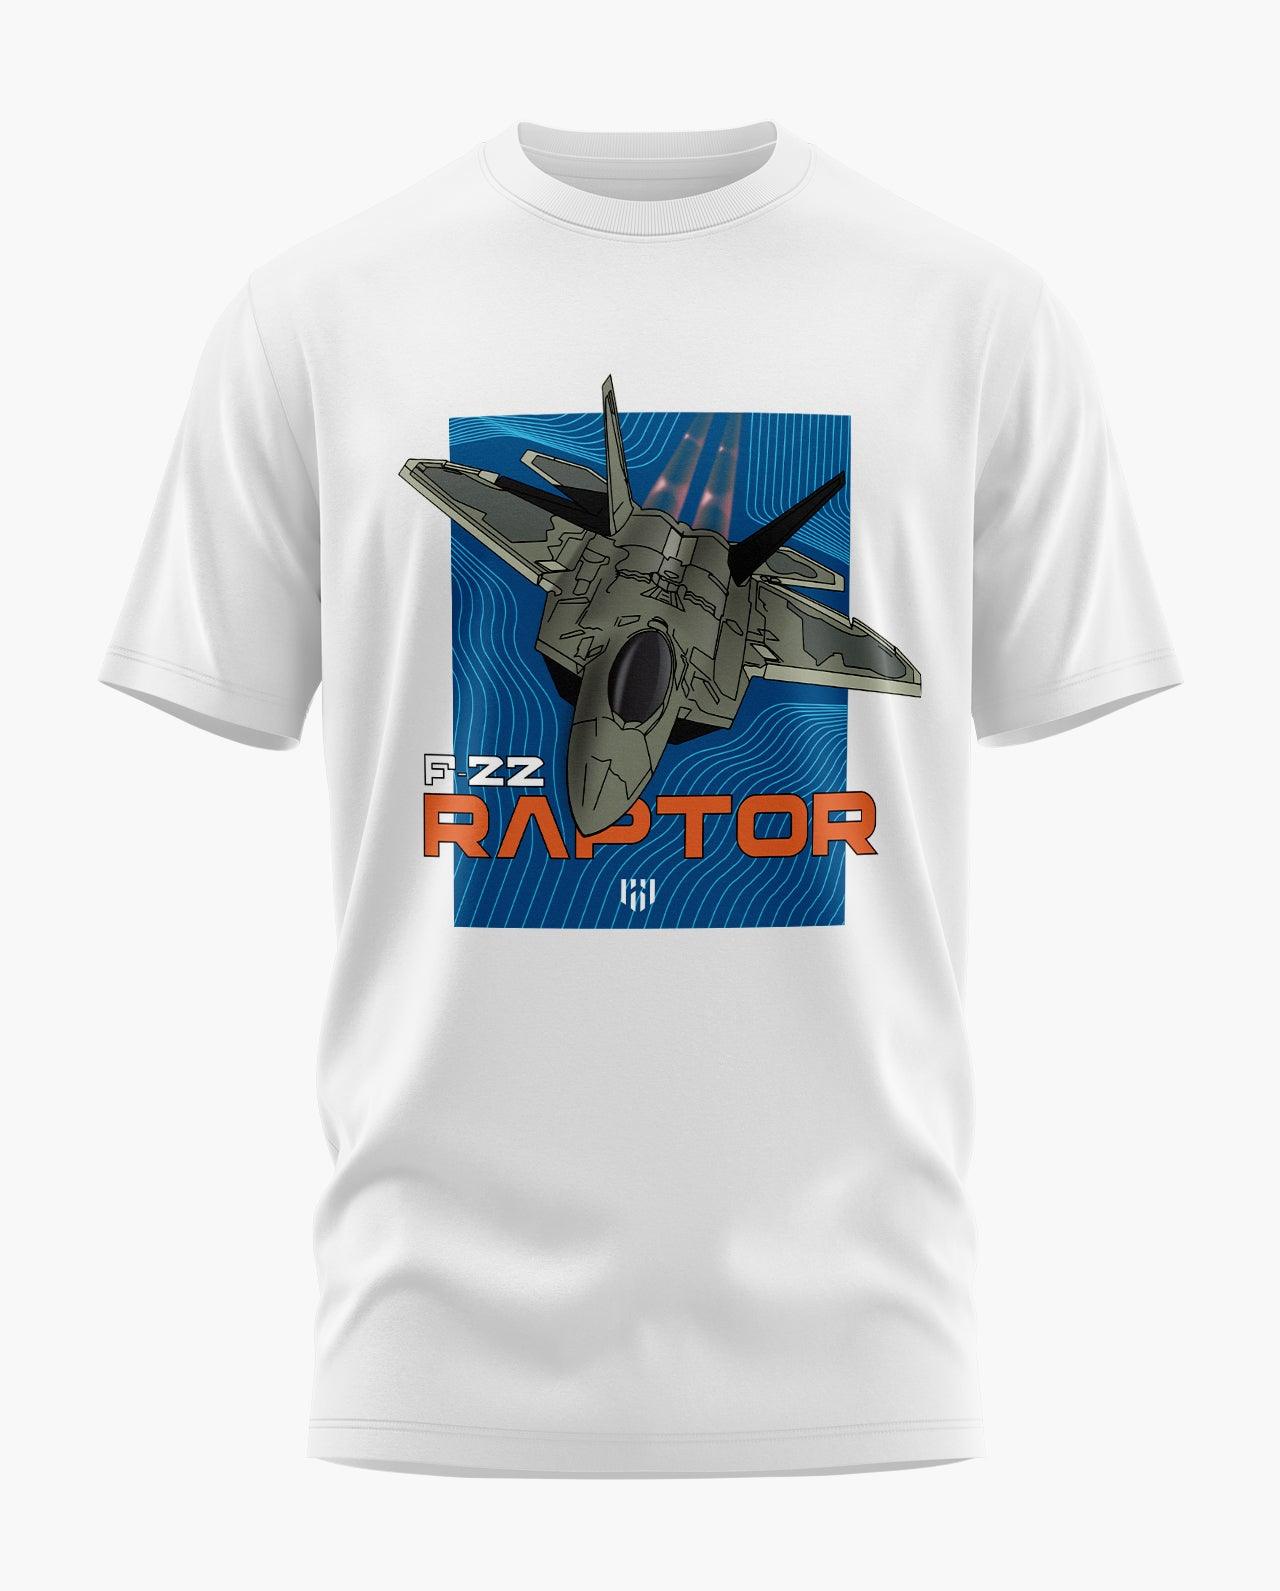 F-22 Raptor T-Shirt - Aero Armour